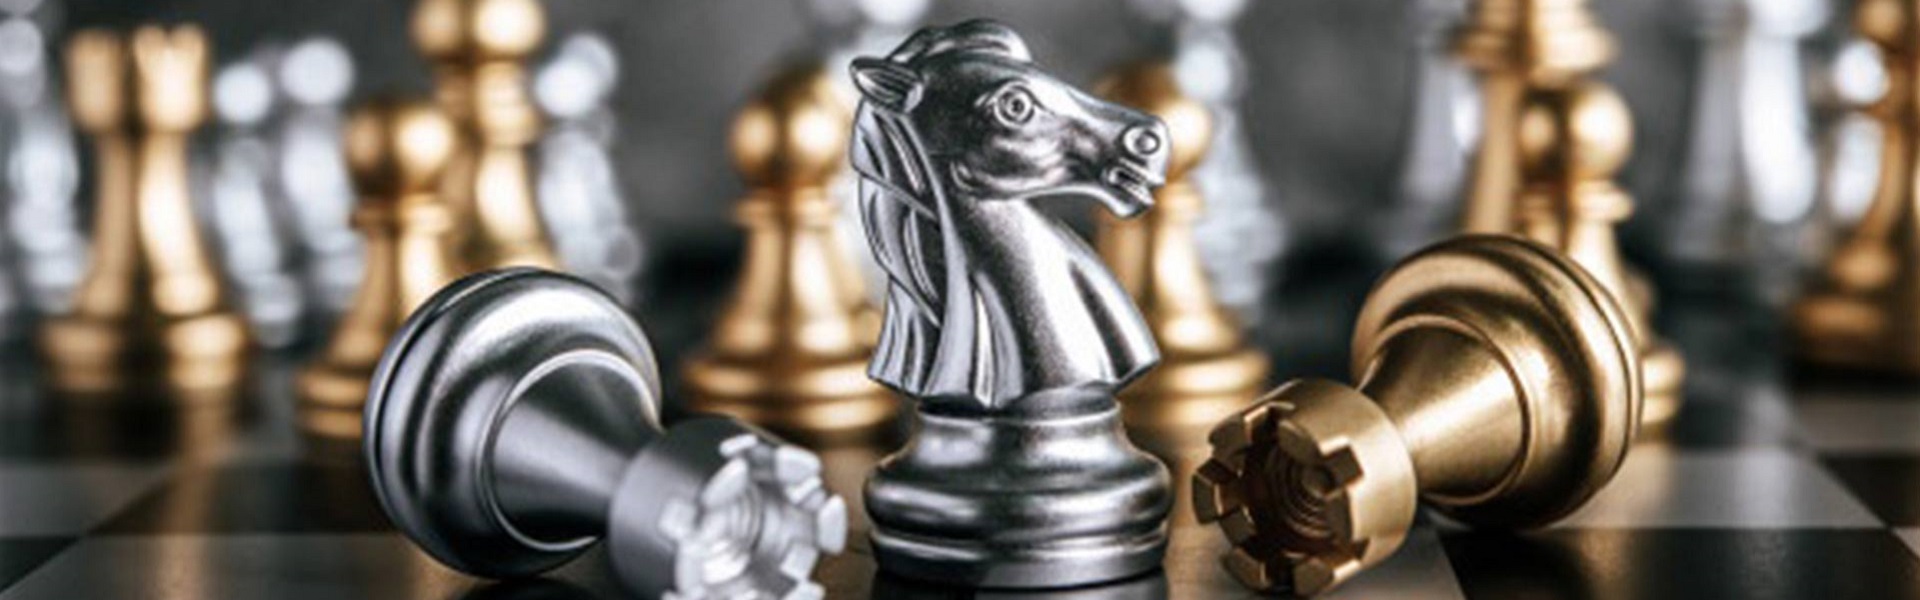 Škola šaha |  Chess lessons Dubai & New York